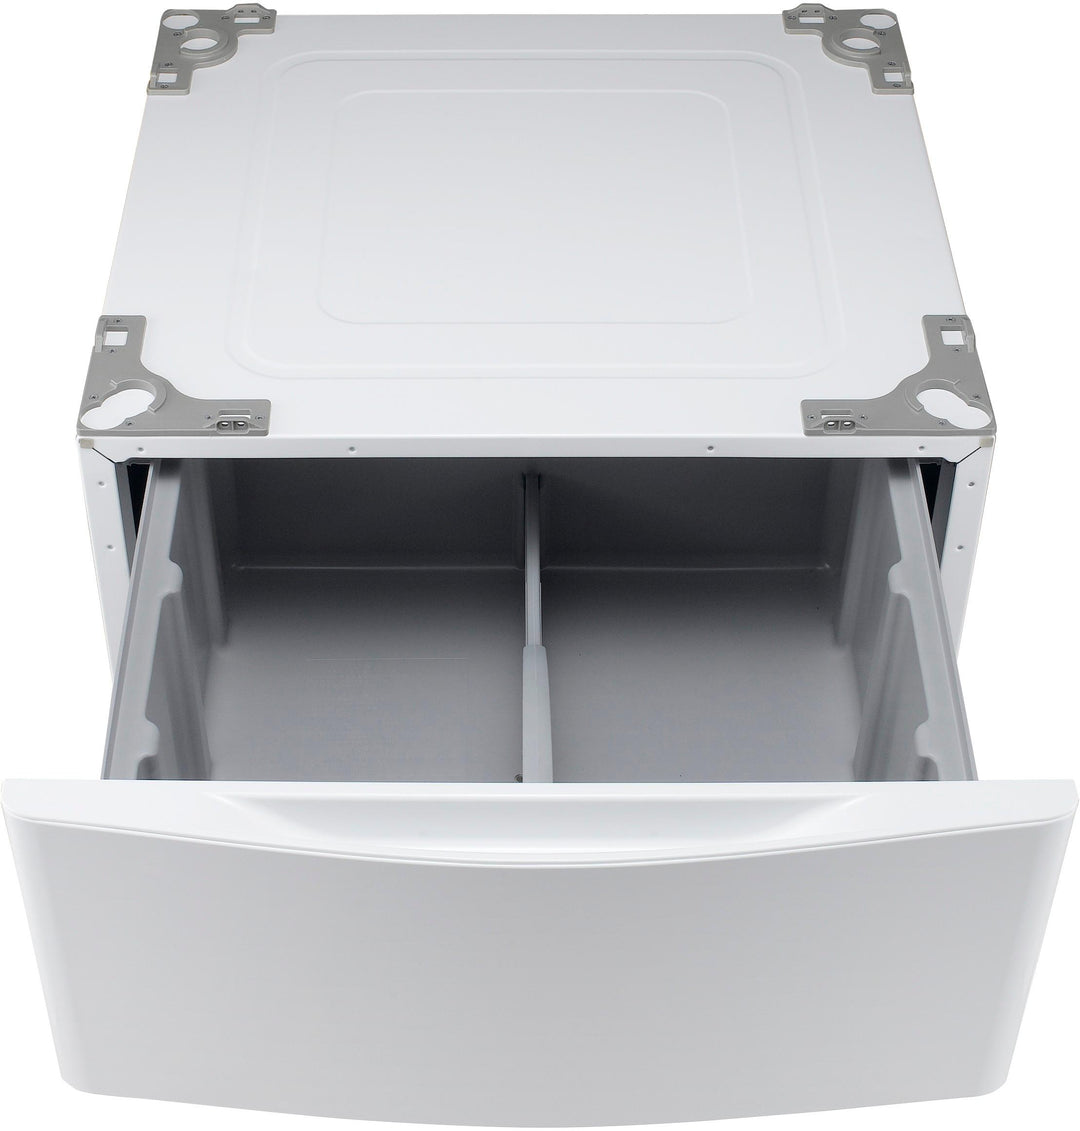 LG - 27" Laundry Pedestal with Storage Drawer - White_0